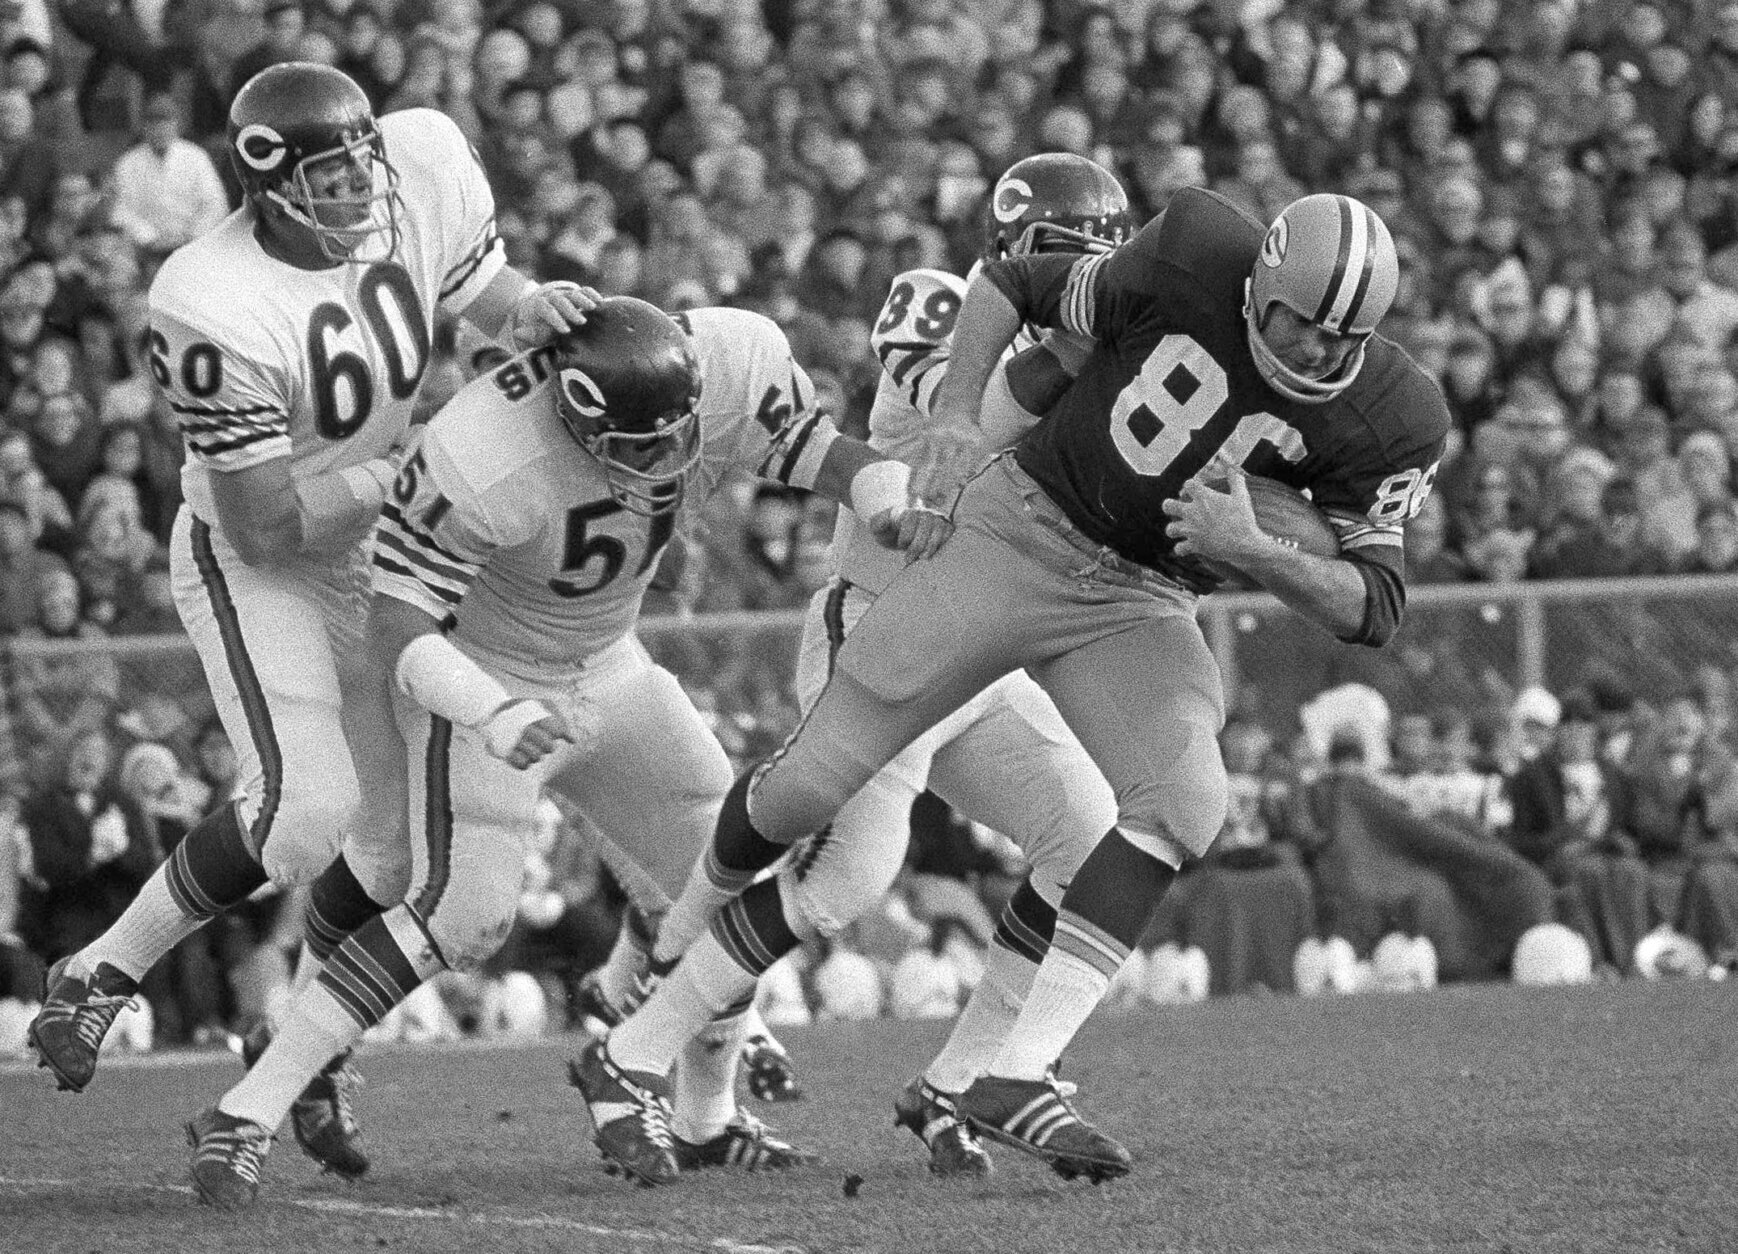 Dick Butkus, ferocious Chicago Bears linebacker and Hall of Famer